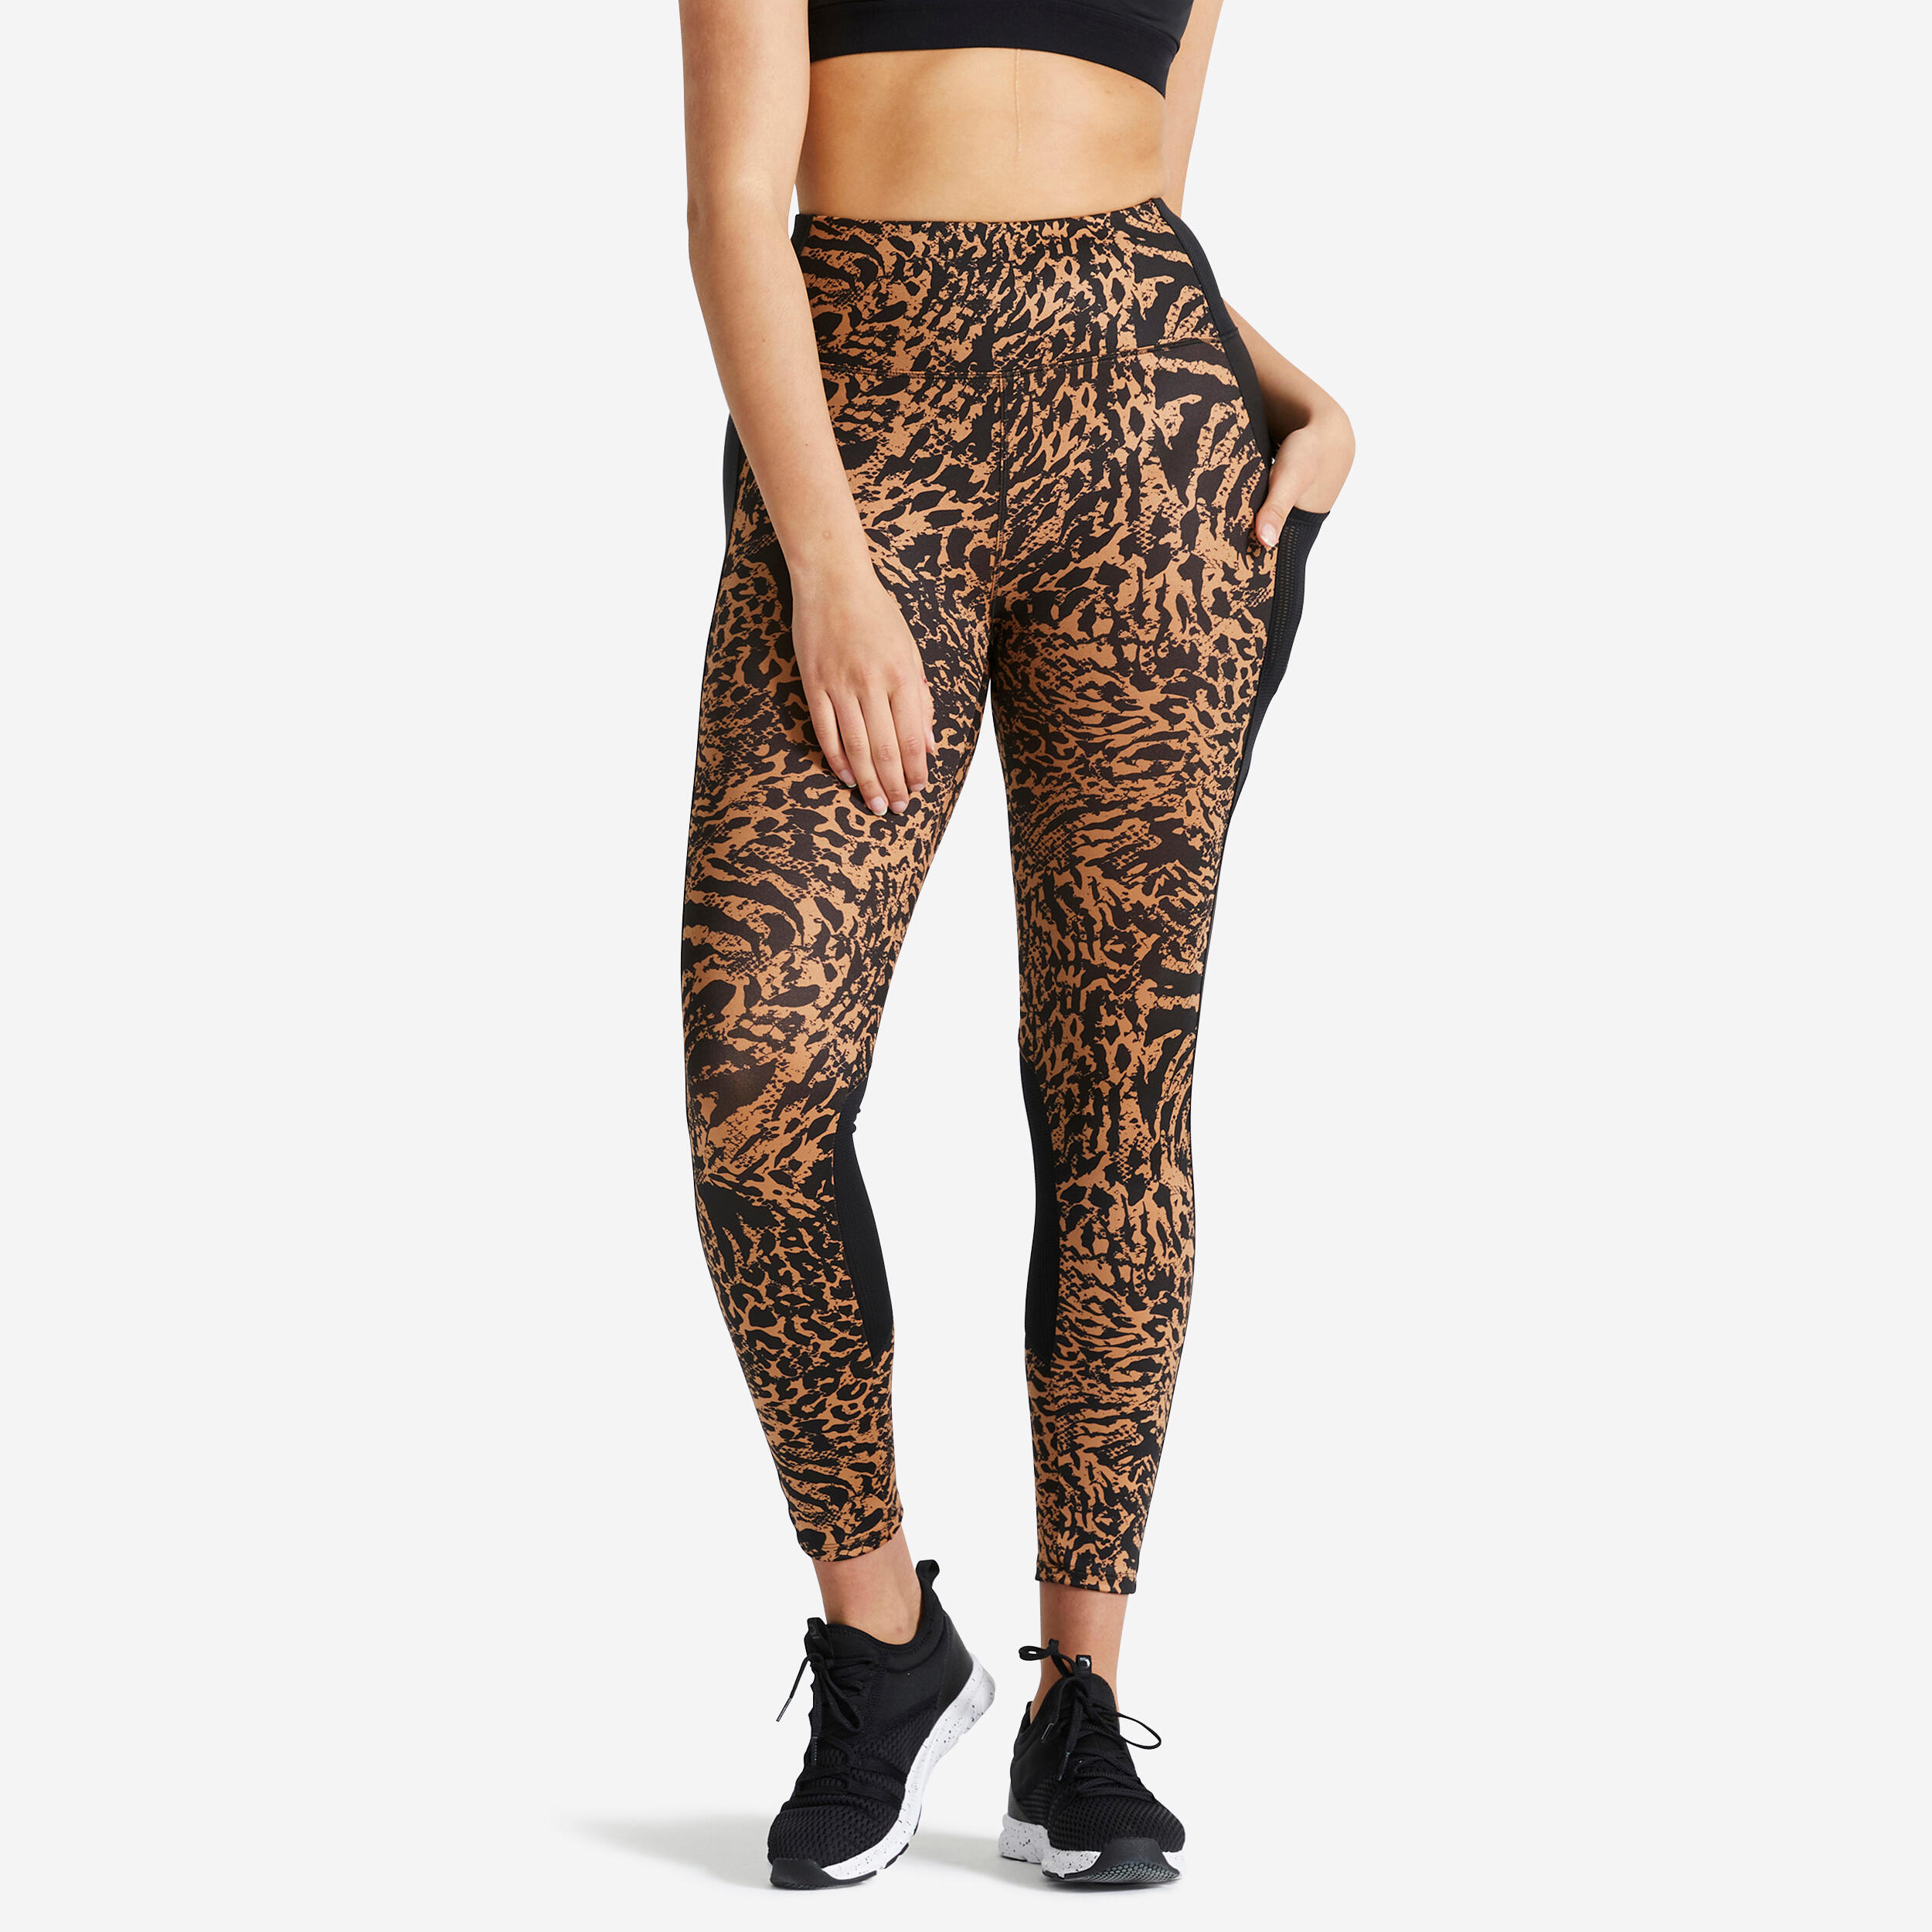 Women's Fitness Cardio Leggings with Phone Pocket - Leopard Print